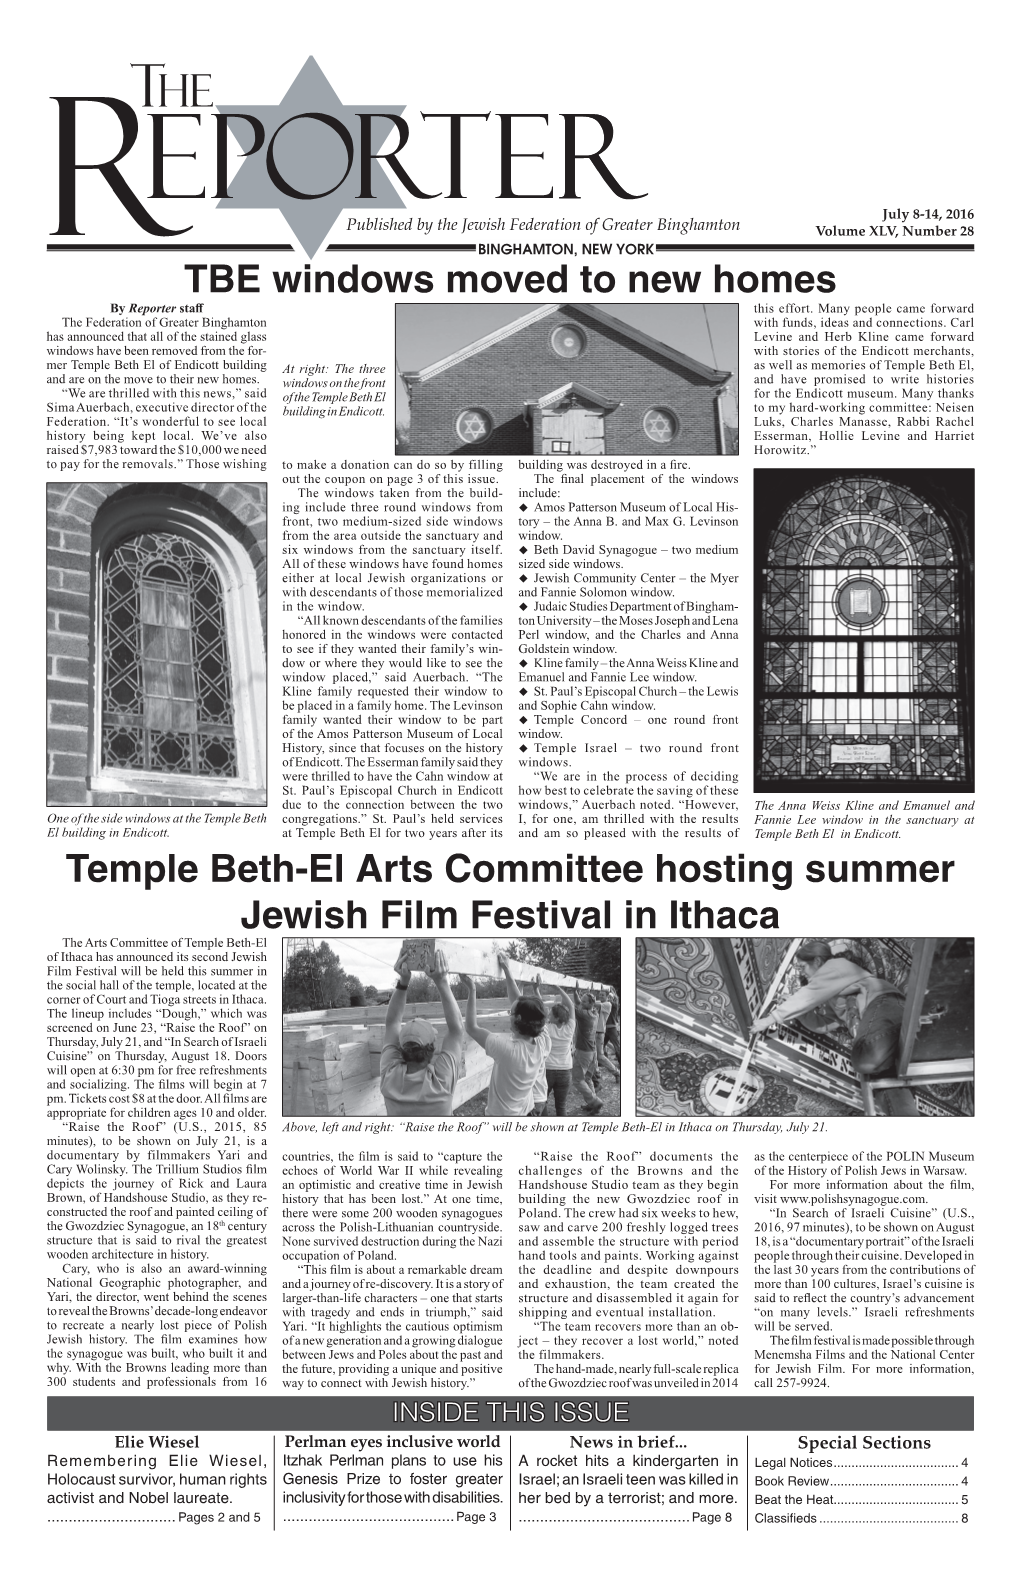 Temple Beth-El Arts Committee Hosting Summer Jewish Film